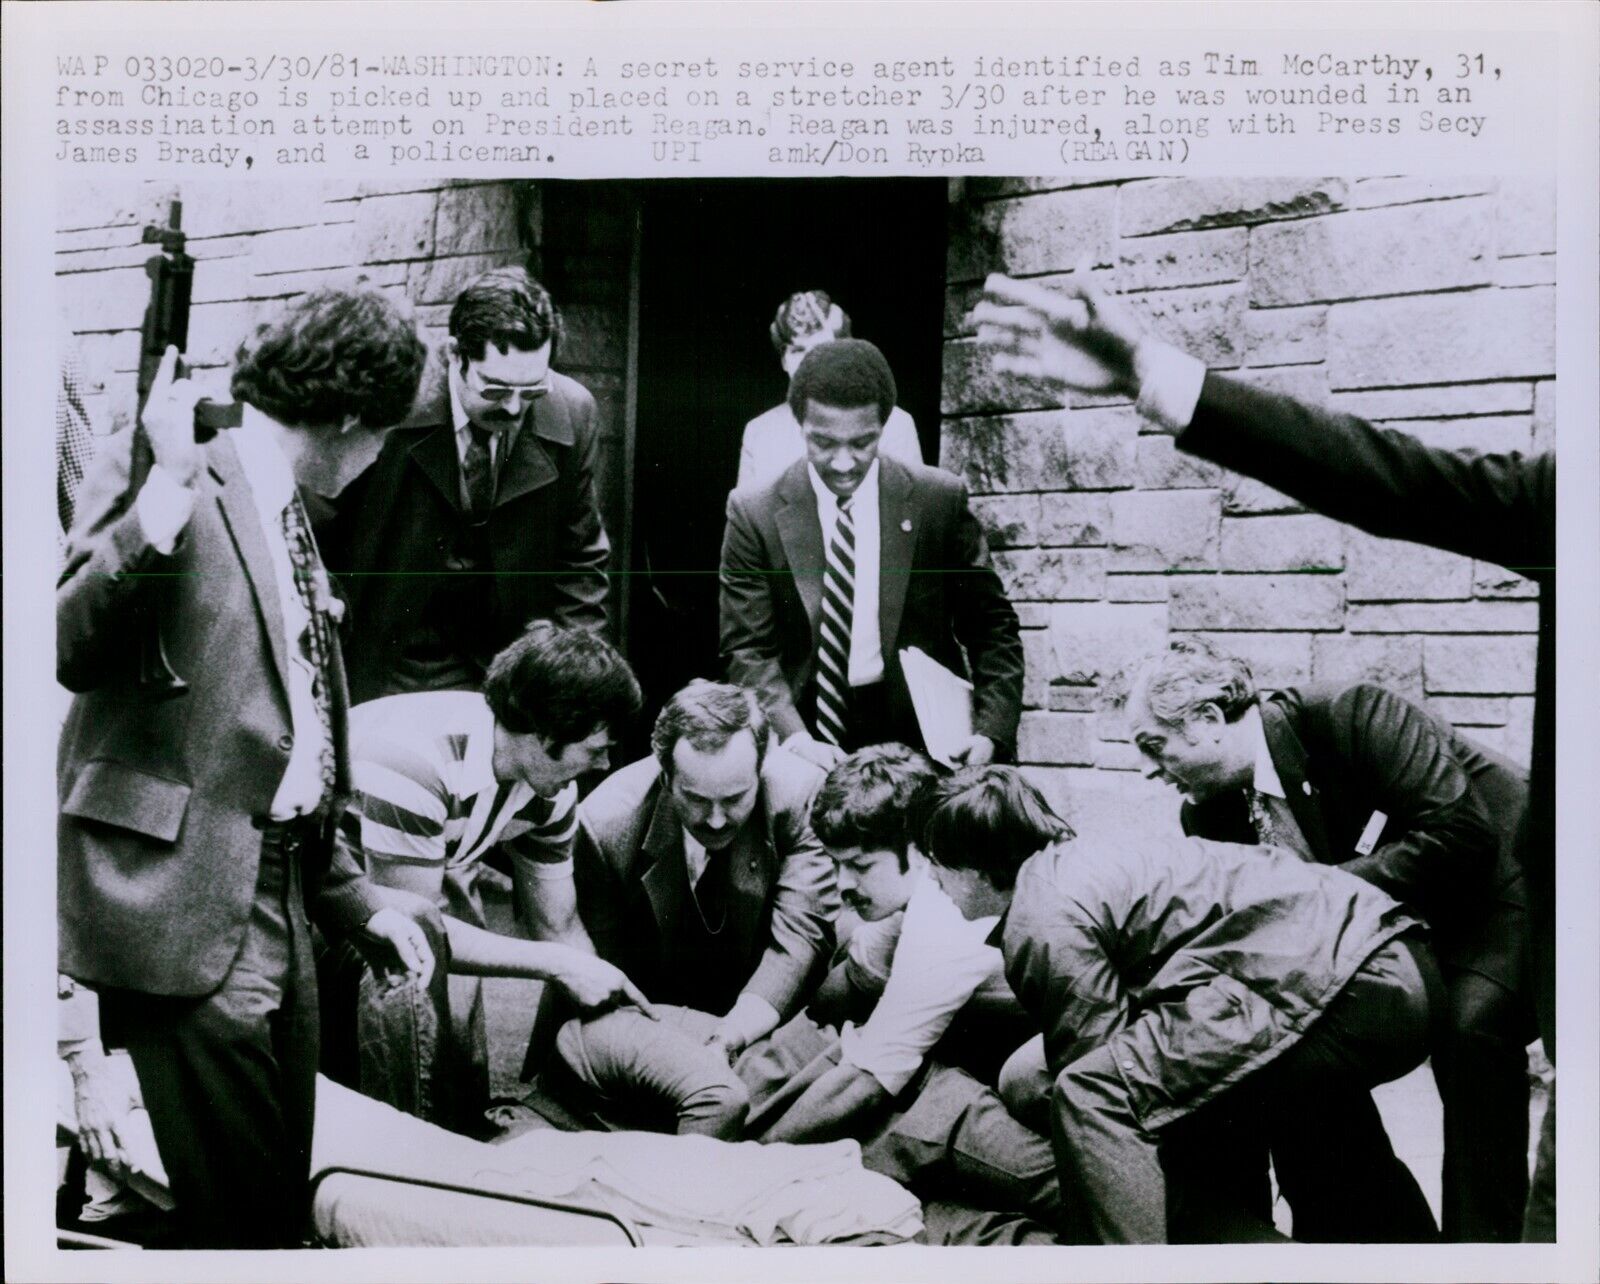 LG754 1981 Wire Photo TIM MCCARTHY Ronald Reagan Assassination Attempt Scene